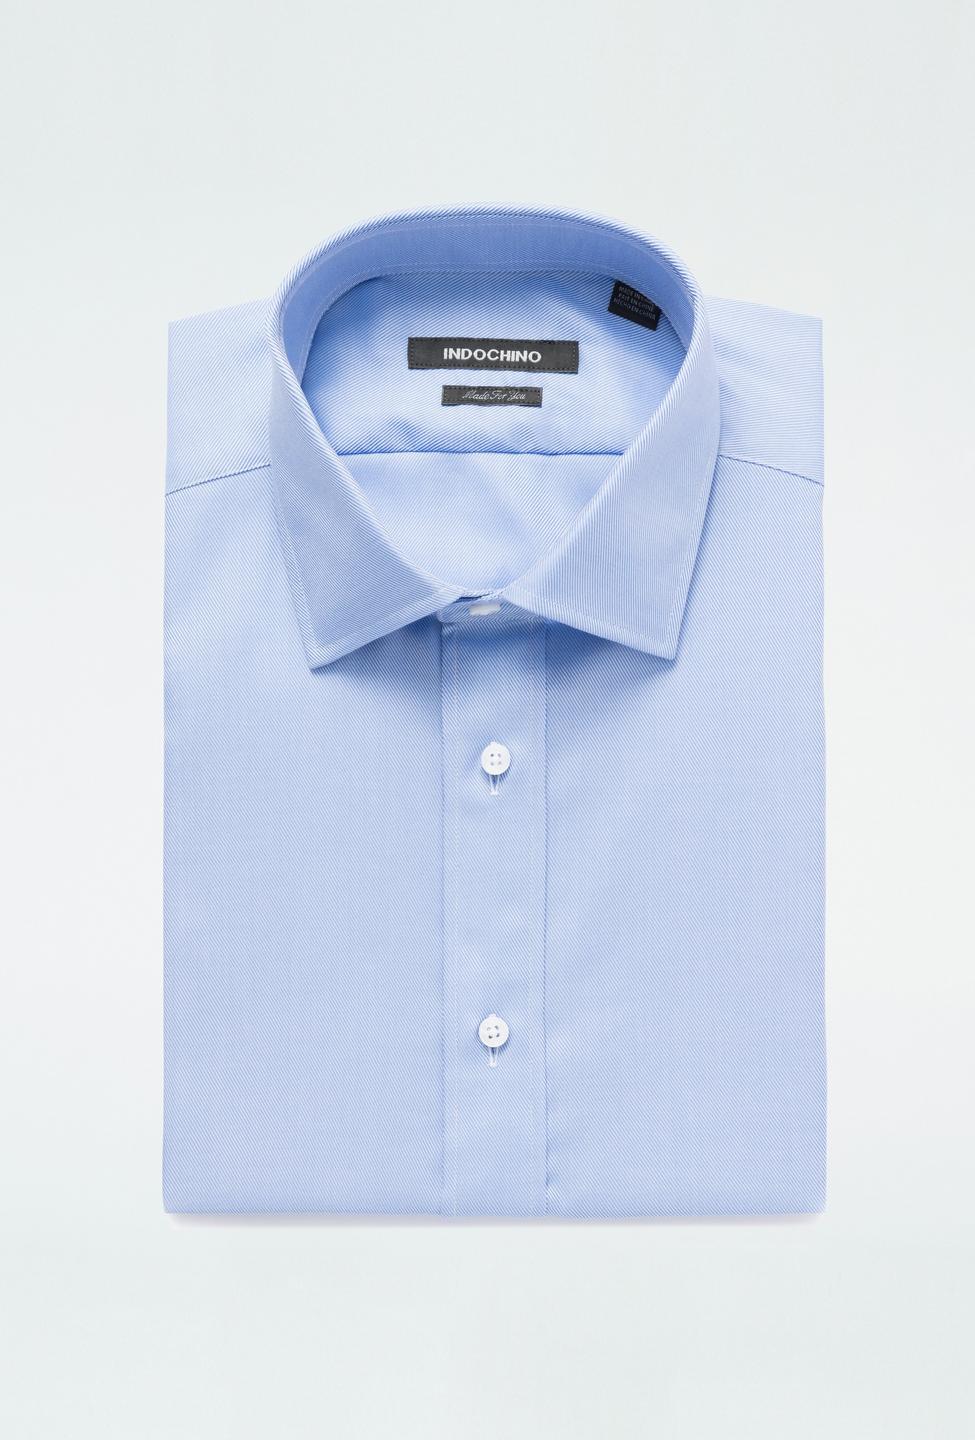 Halewood Blue Shirt